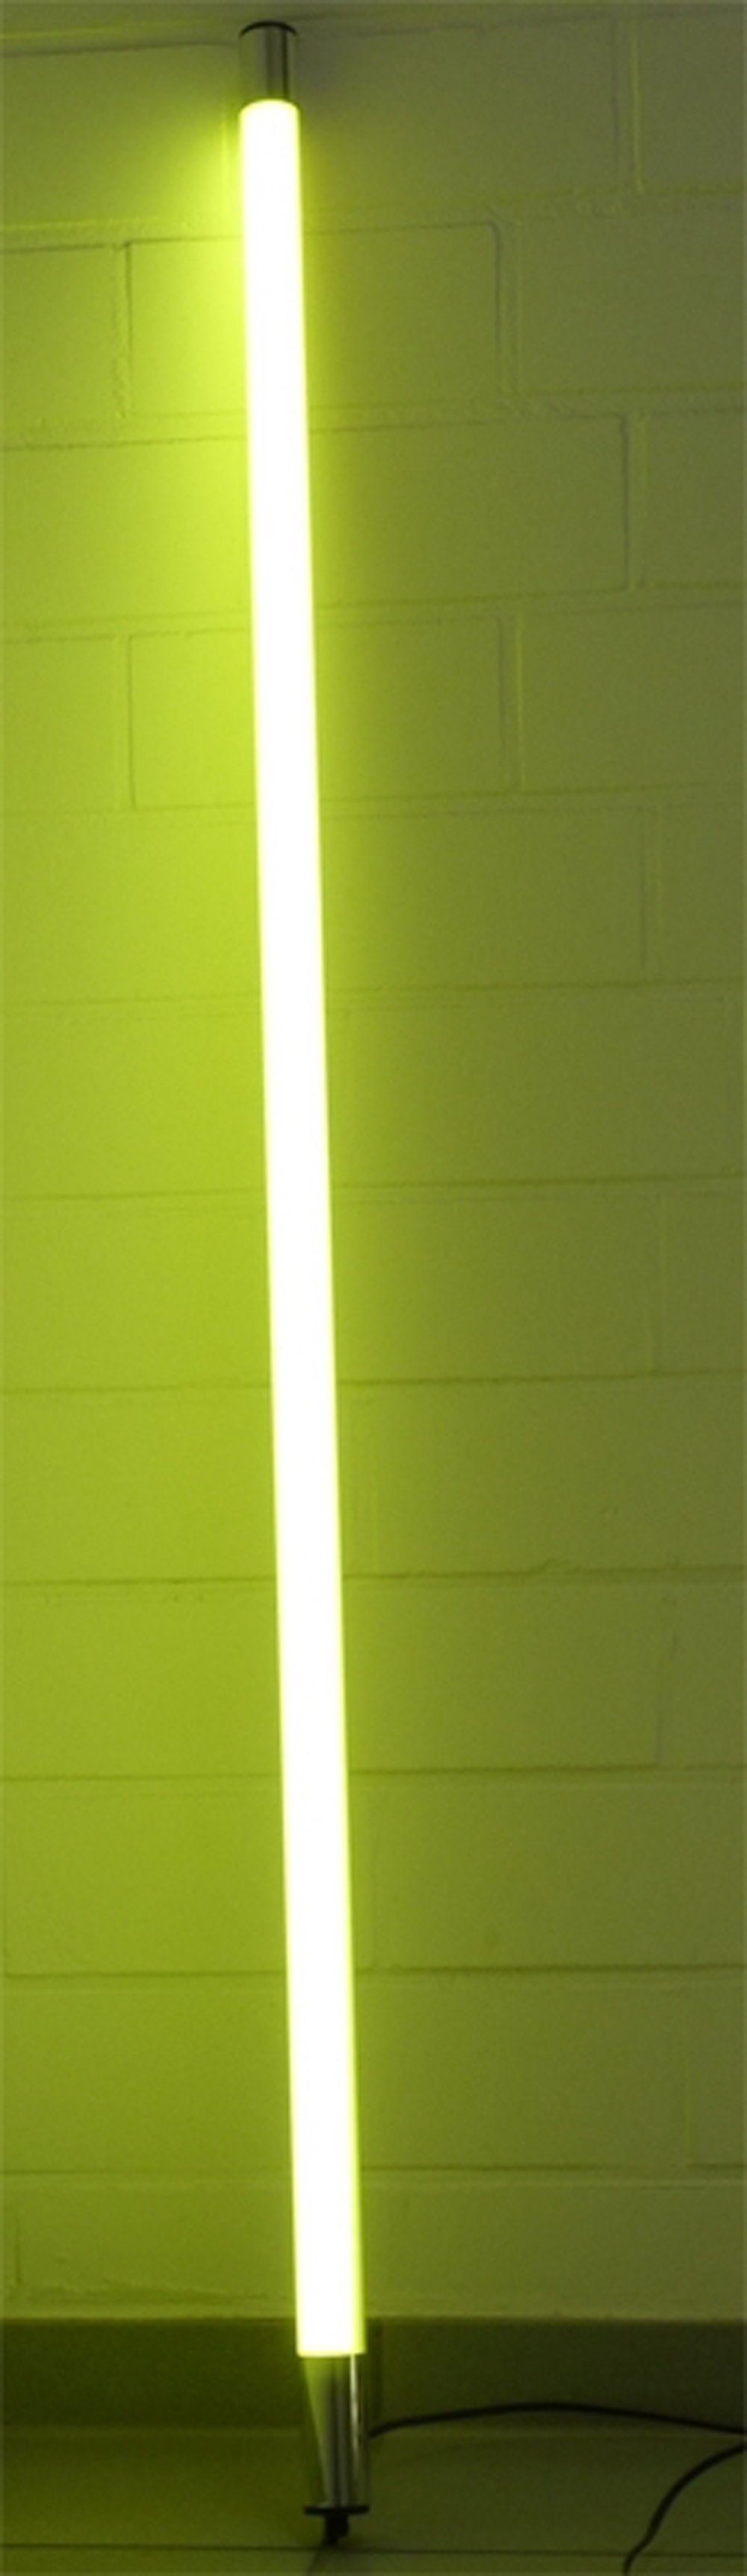 XENON LED Wandleuchte 6727 LED Leuchtstab Satiniert 0,63m Lang 1000Lumen IP20 Innen Gelb, LED Röhre T8, Gelb